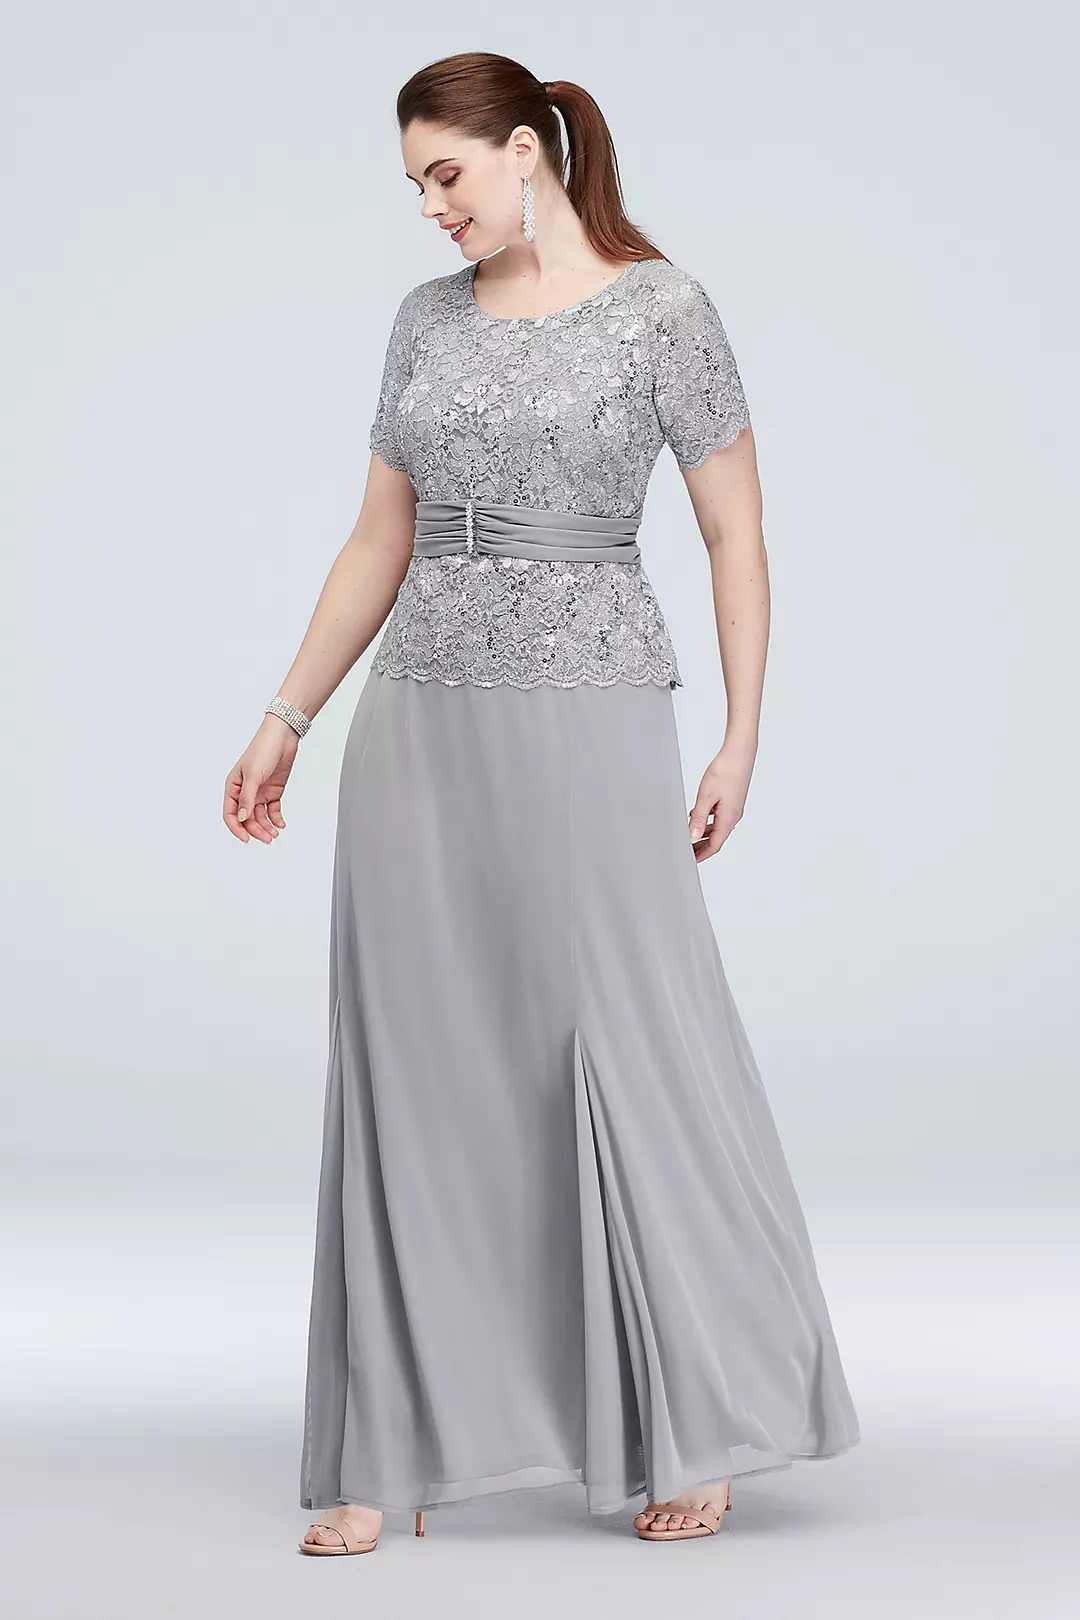 Chiffon Short-Sleeve Lace Plus Size Dress Image